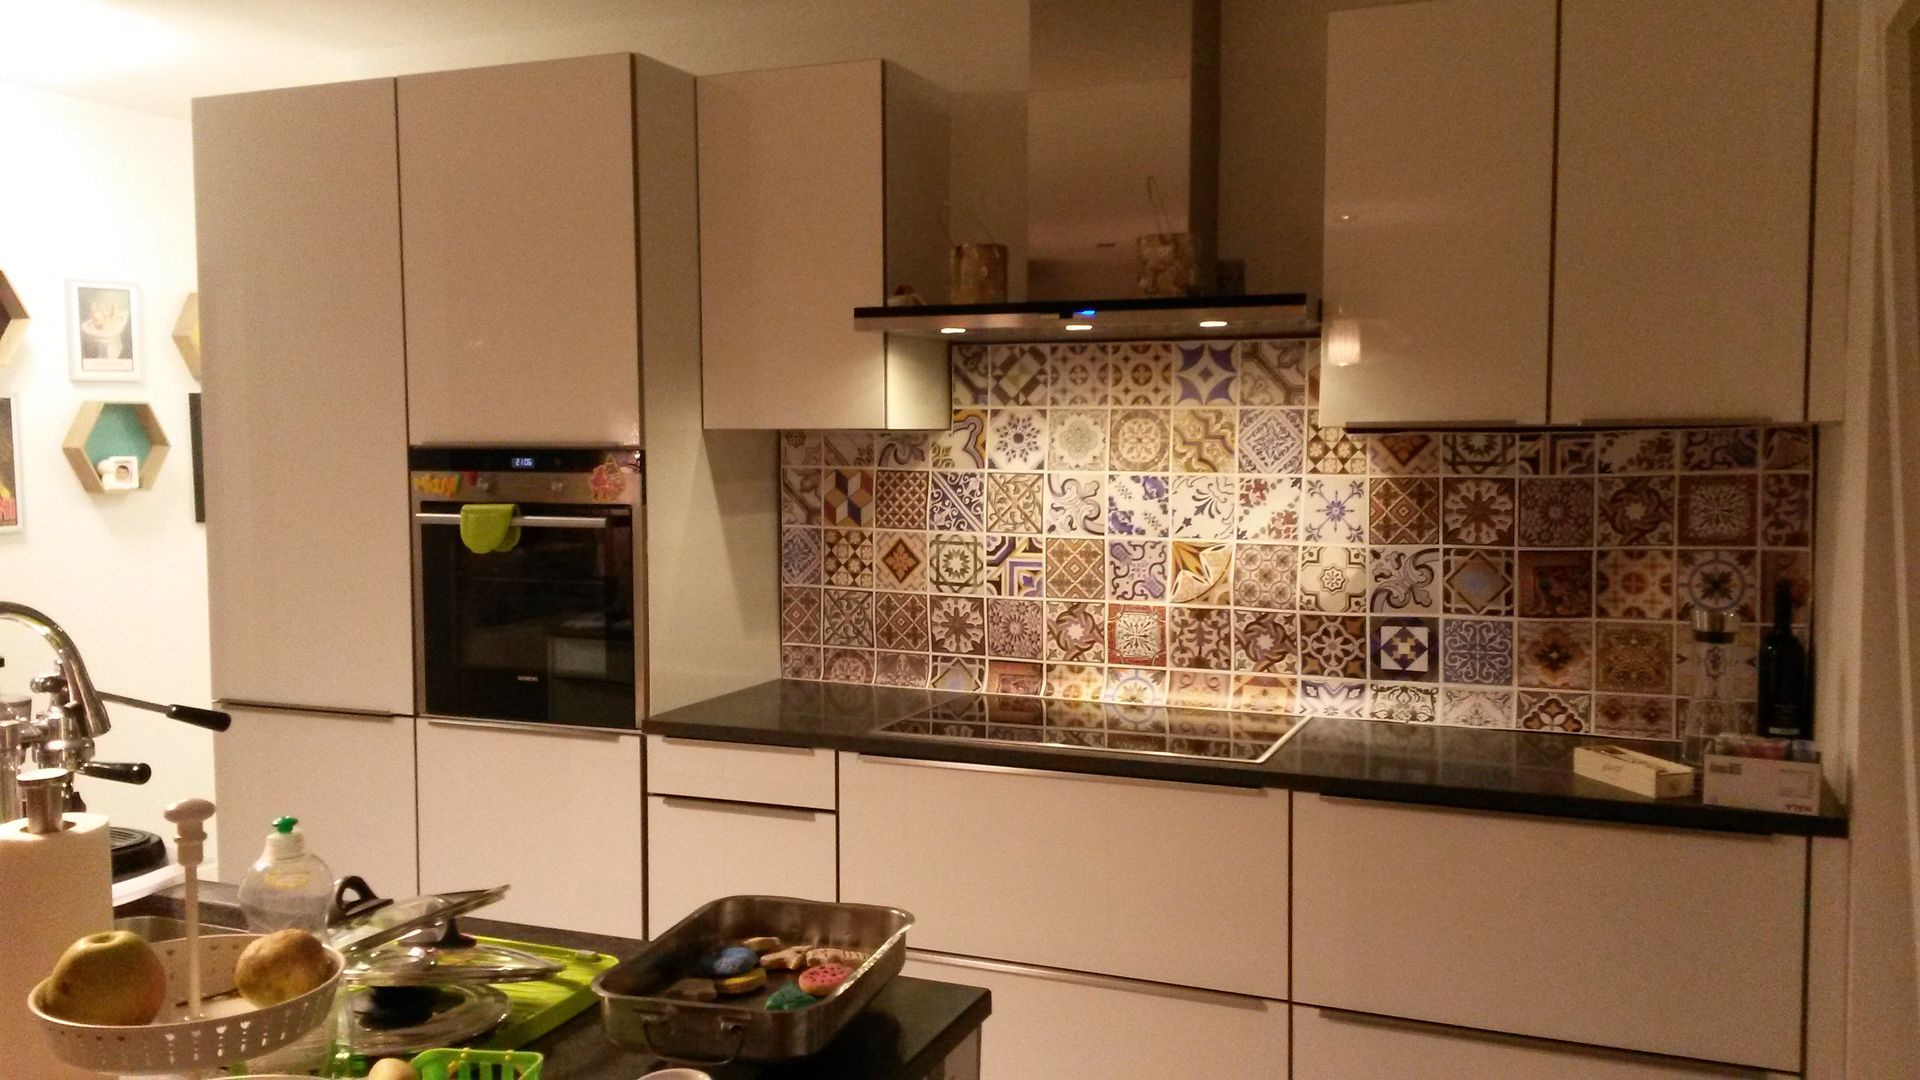 Customized Kitchen Backsplash with Portuguese Tiles Wall Art MOONWALLSTICKERS.COM